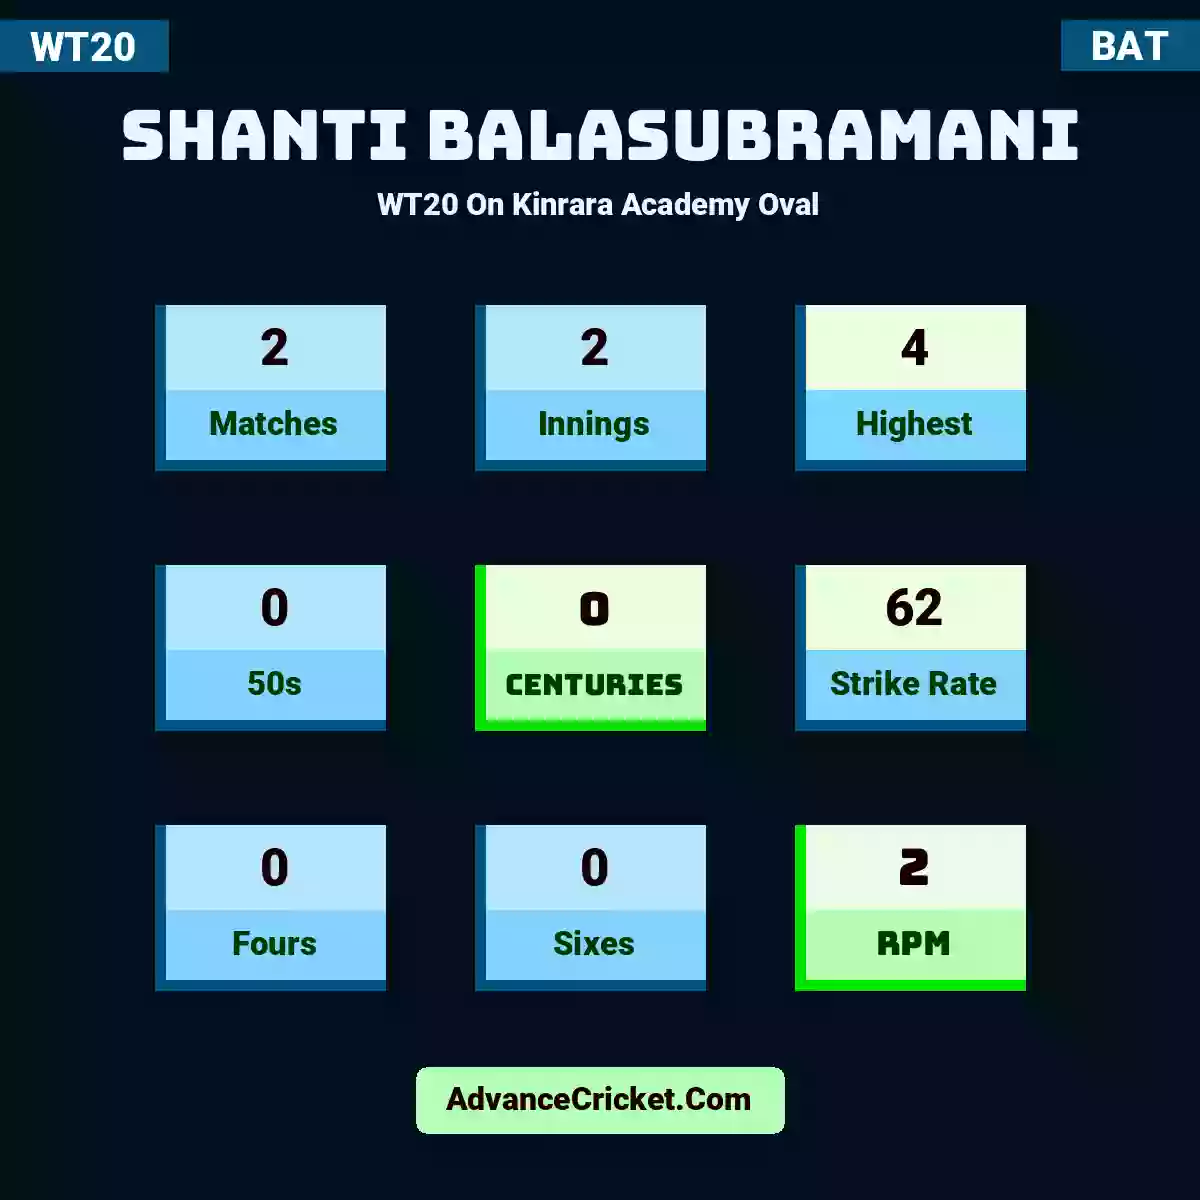 Shanti Balasubramani WT20  On Kinrara Academy Oval, Shanti Balasubramani played 2 matches, scored 4 runs as highest, 0 half-centuries, and 0 centuries, with a strike rate of 62. S.Balasubramani hit 0 fours and 0 sixes, with an RPM of 2.